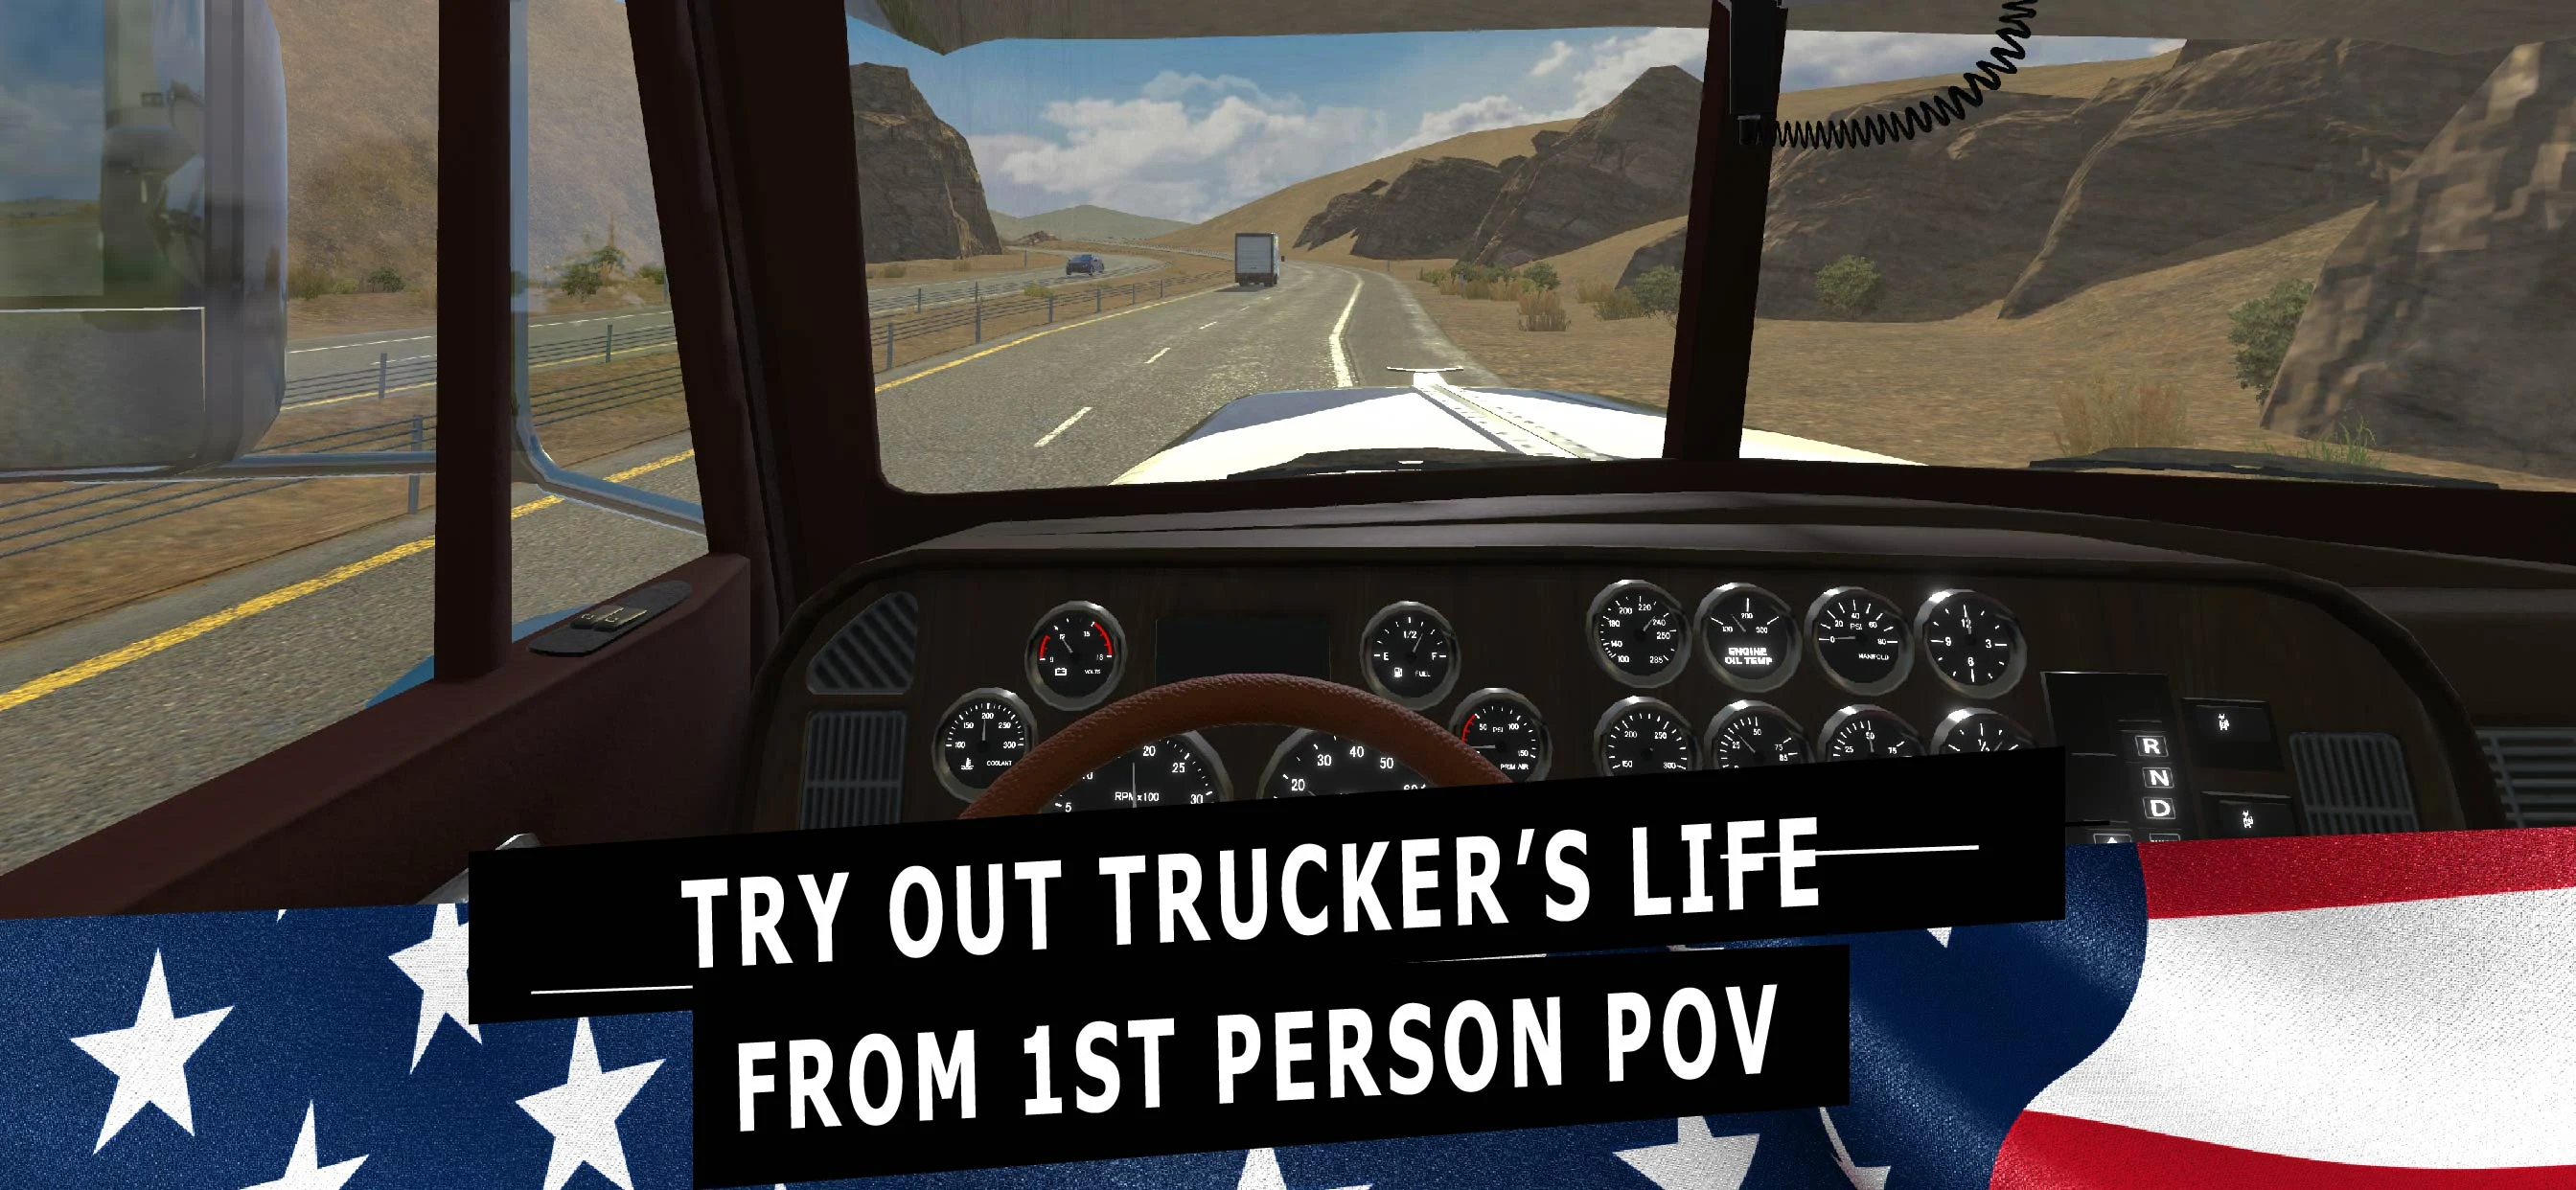 Truck Simulator Pro USA APK